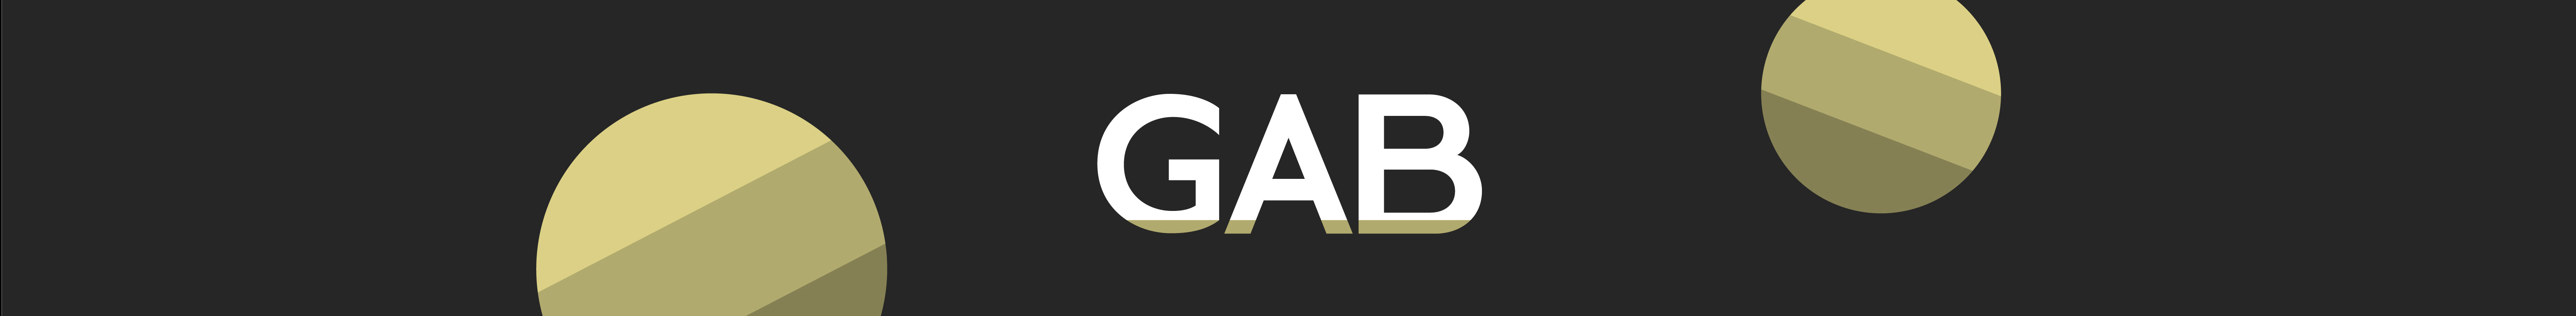 Gab Gallego's profile banner